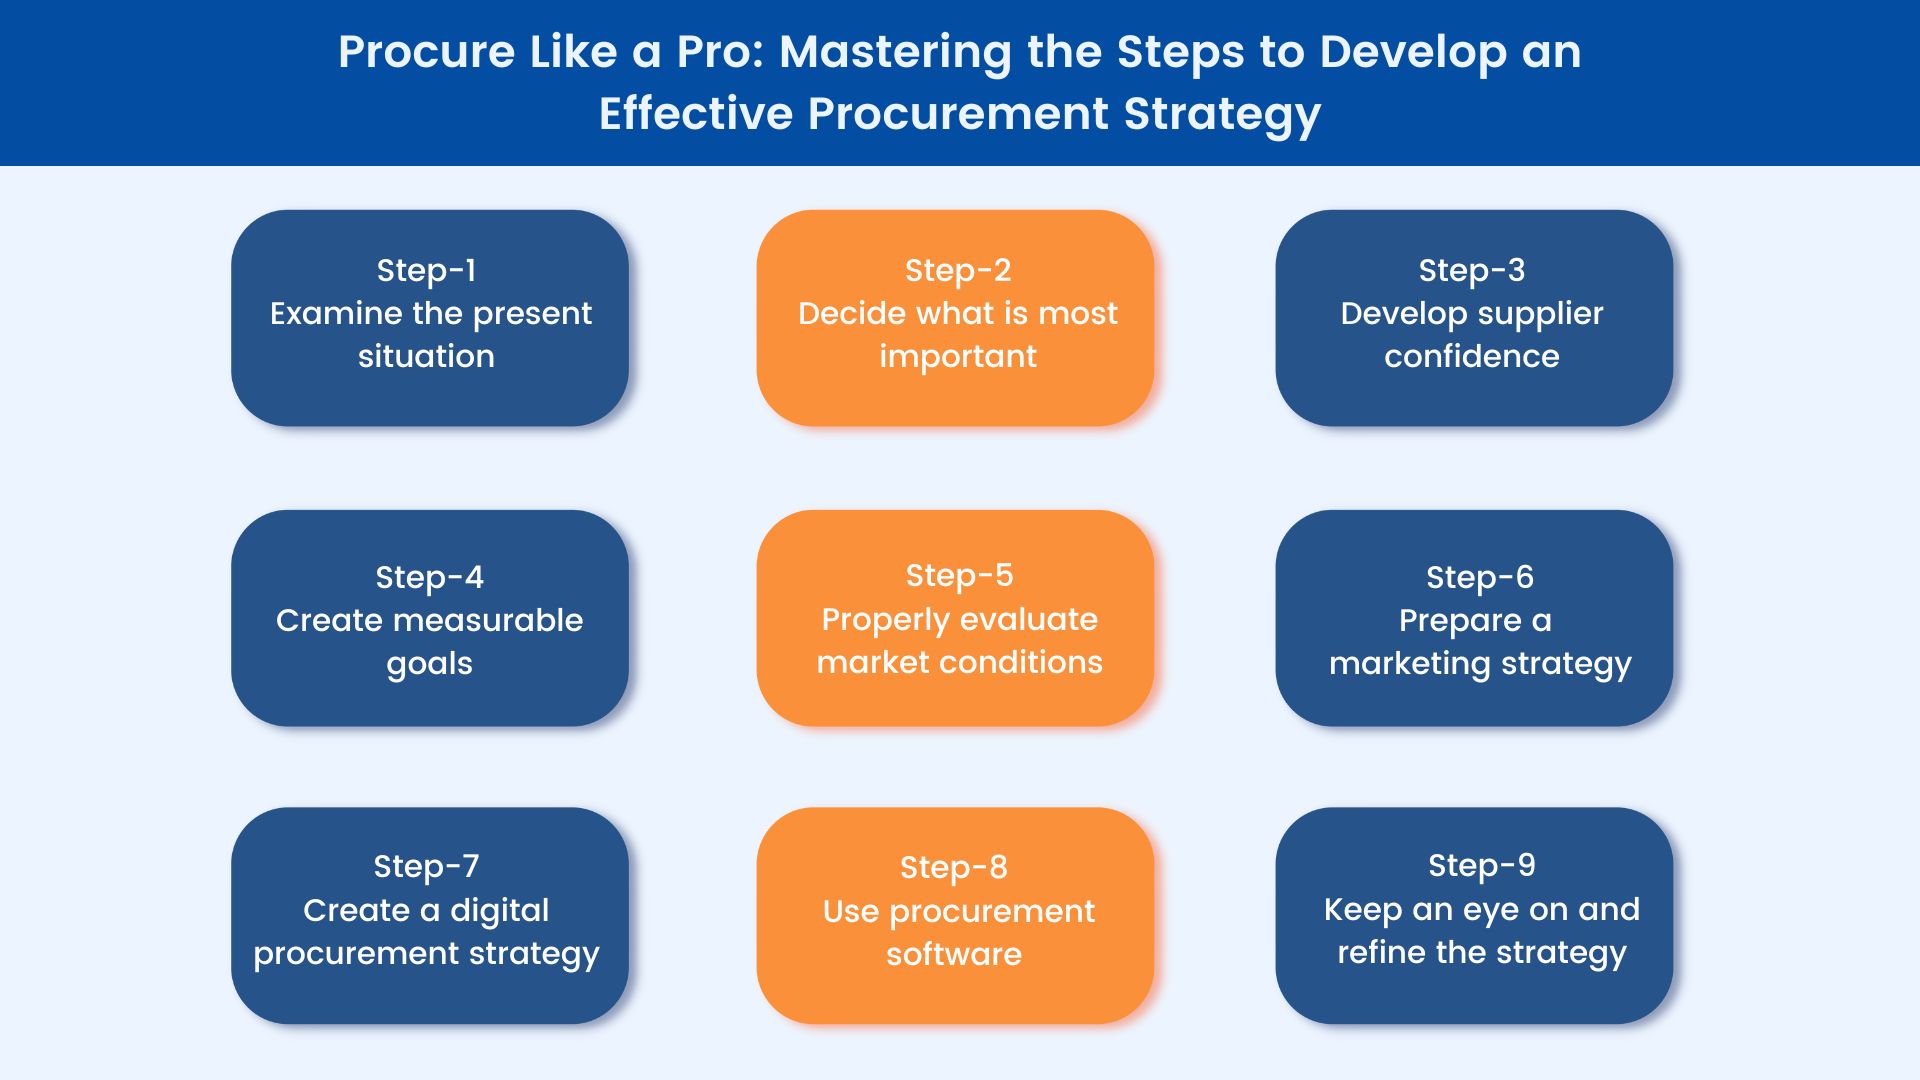 A Successful Digital Procurement Strategy in 9 Simple Steps